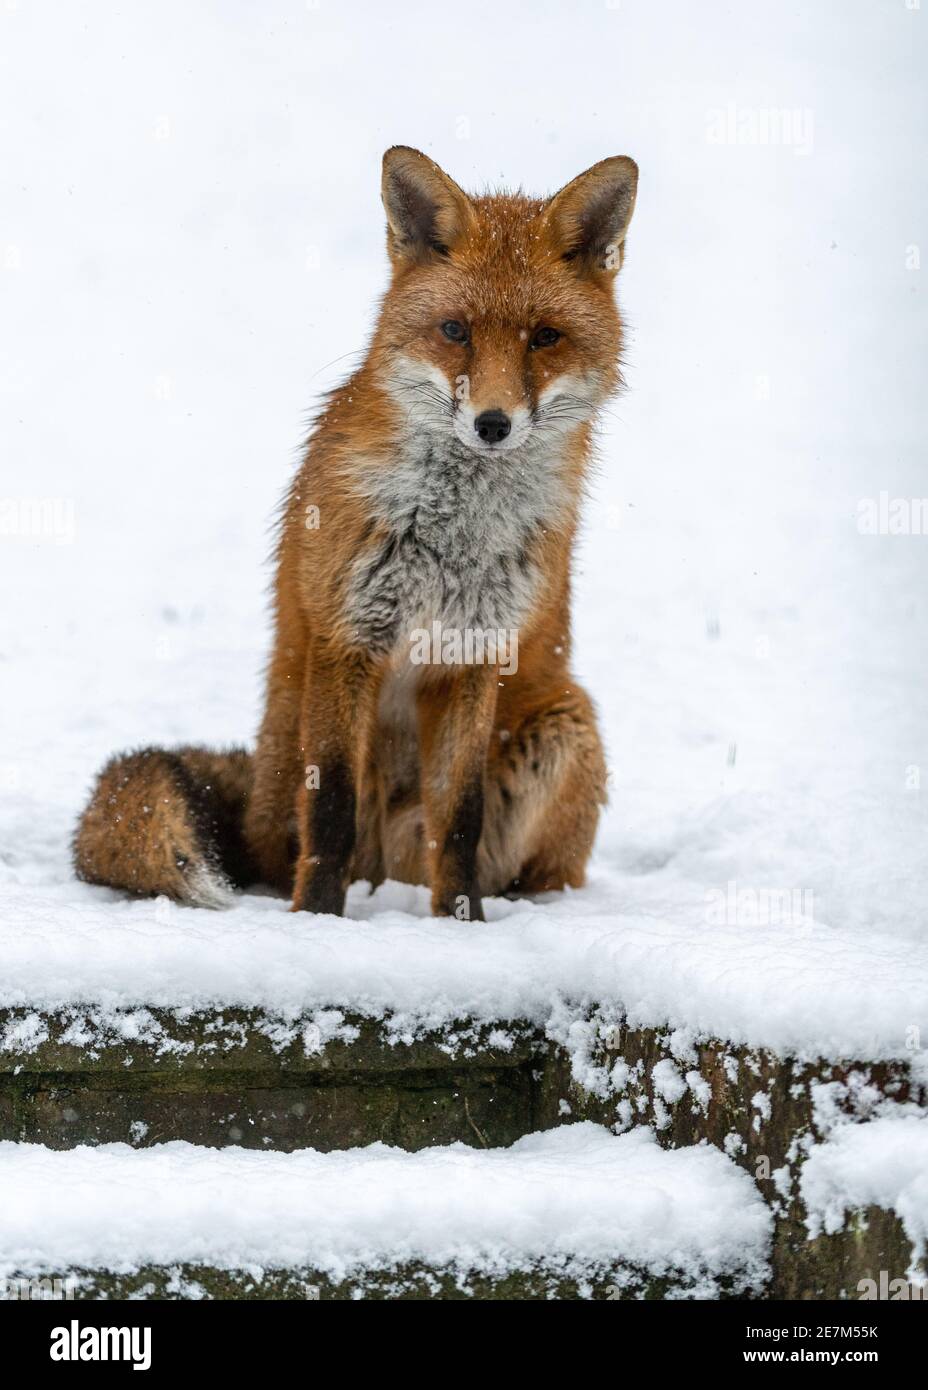 An inquisitive young fox surveys a wintry garden Stock Photo